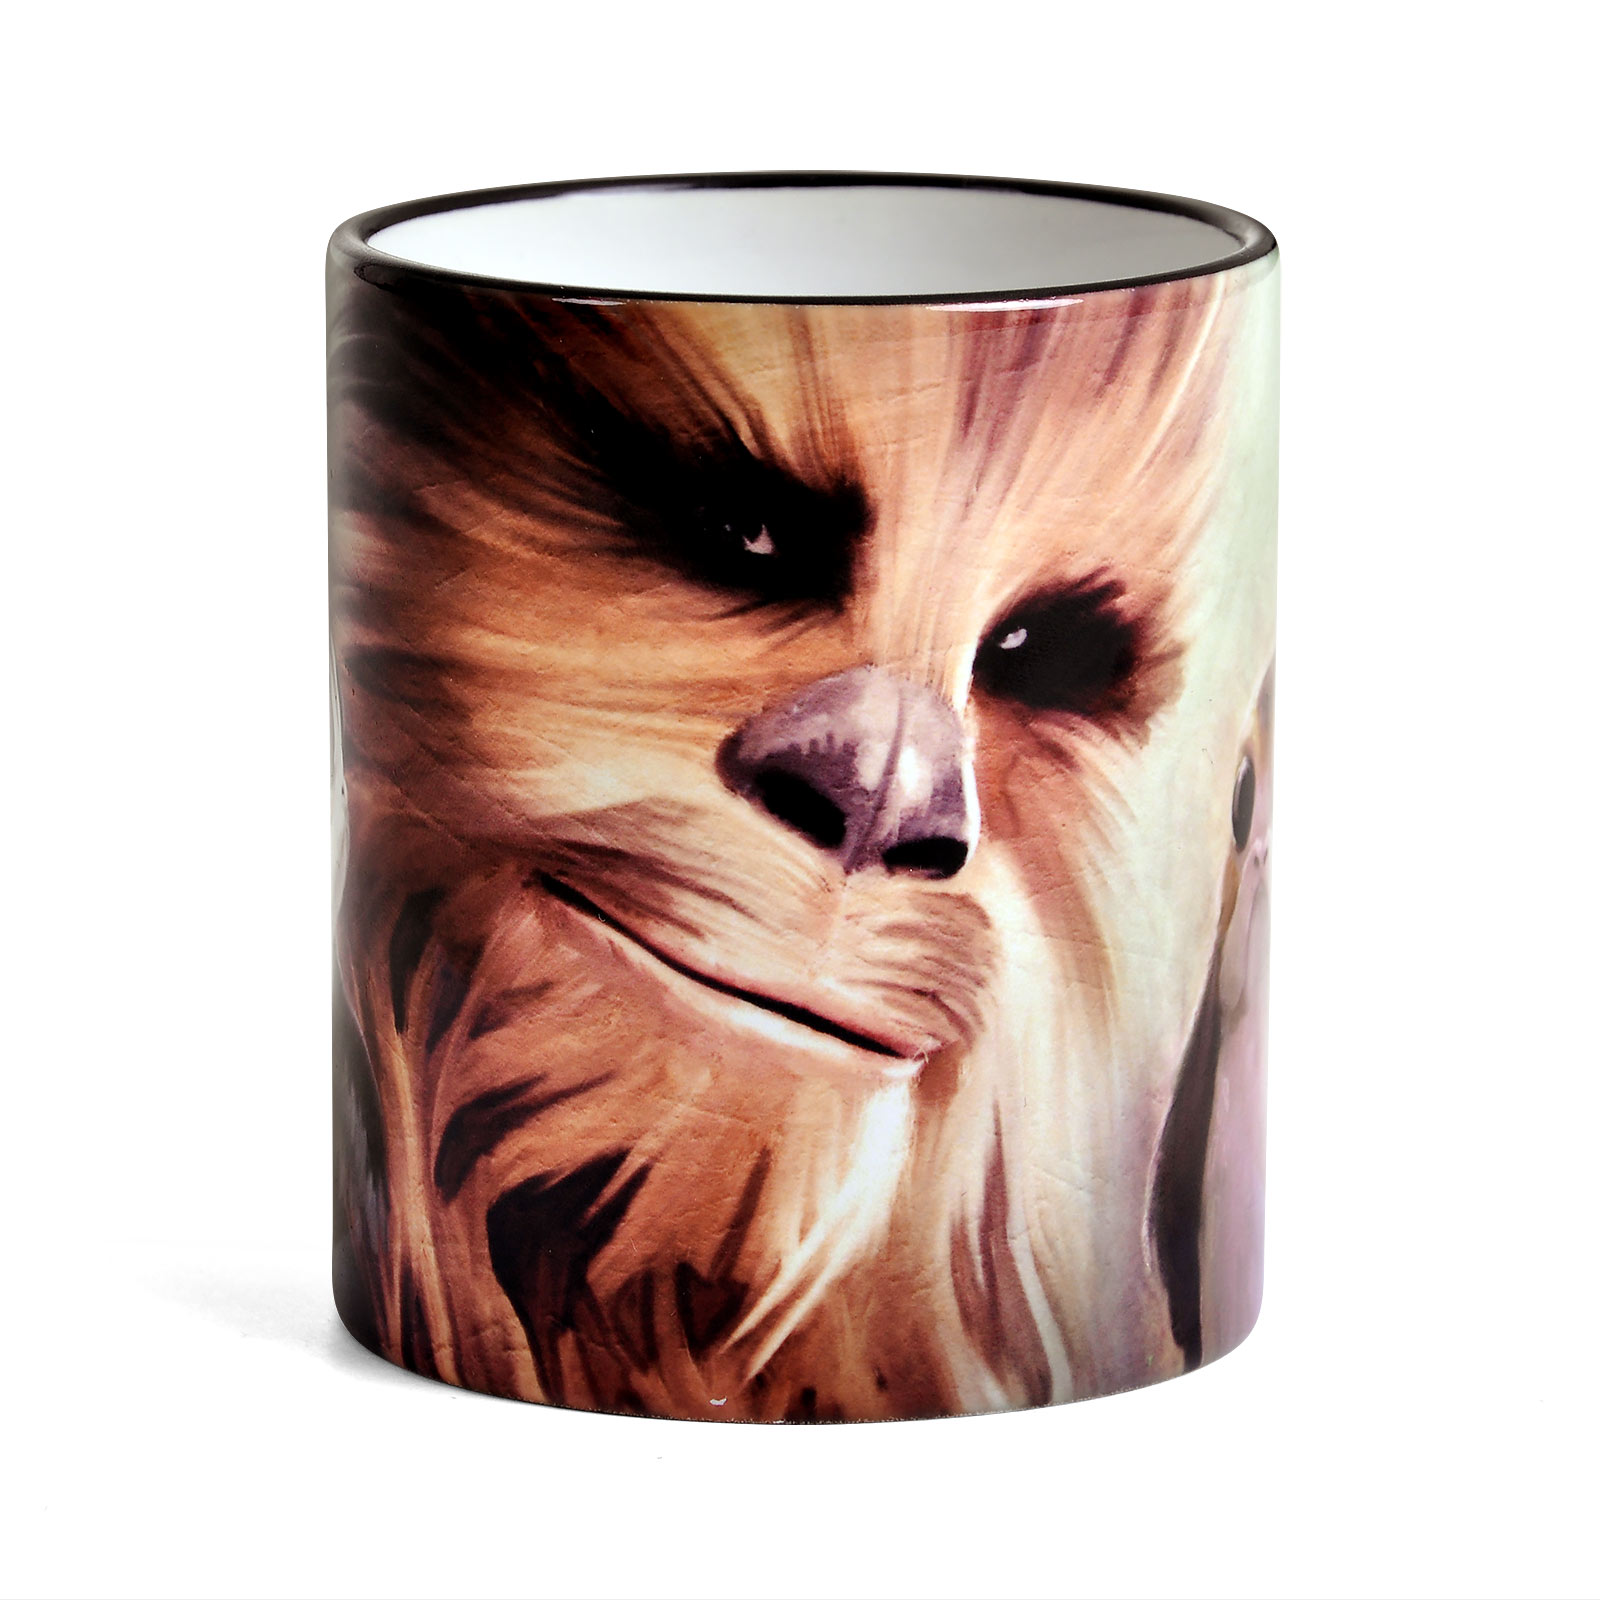 Star Wars - Mug Porgs et Chewie